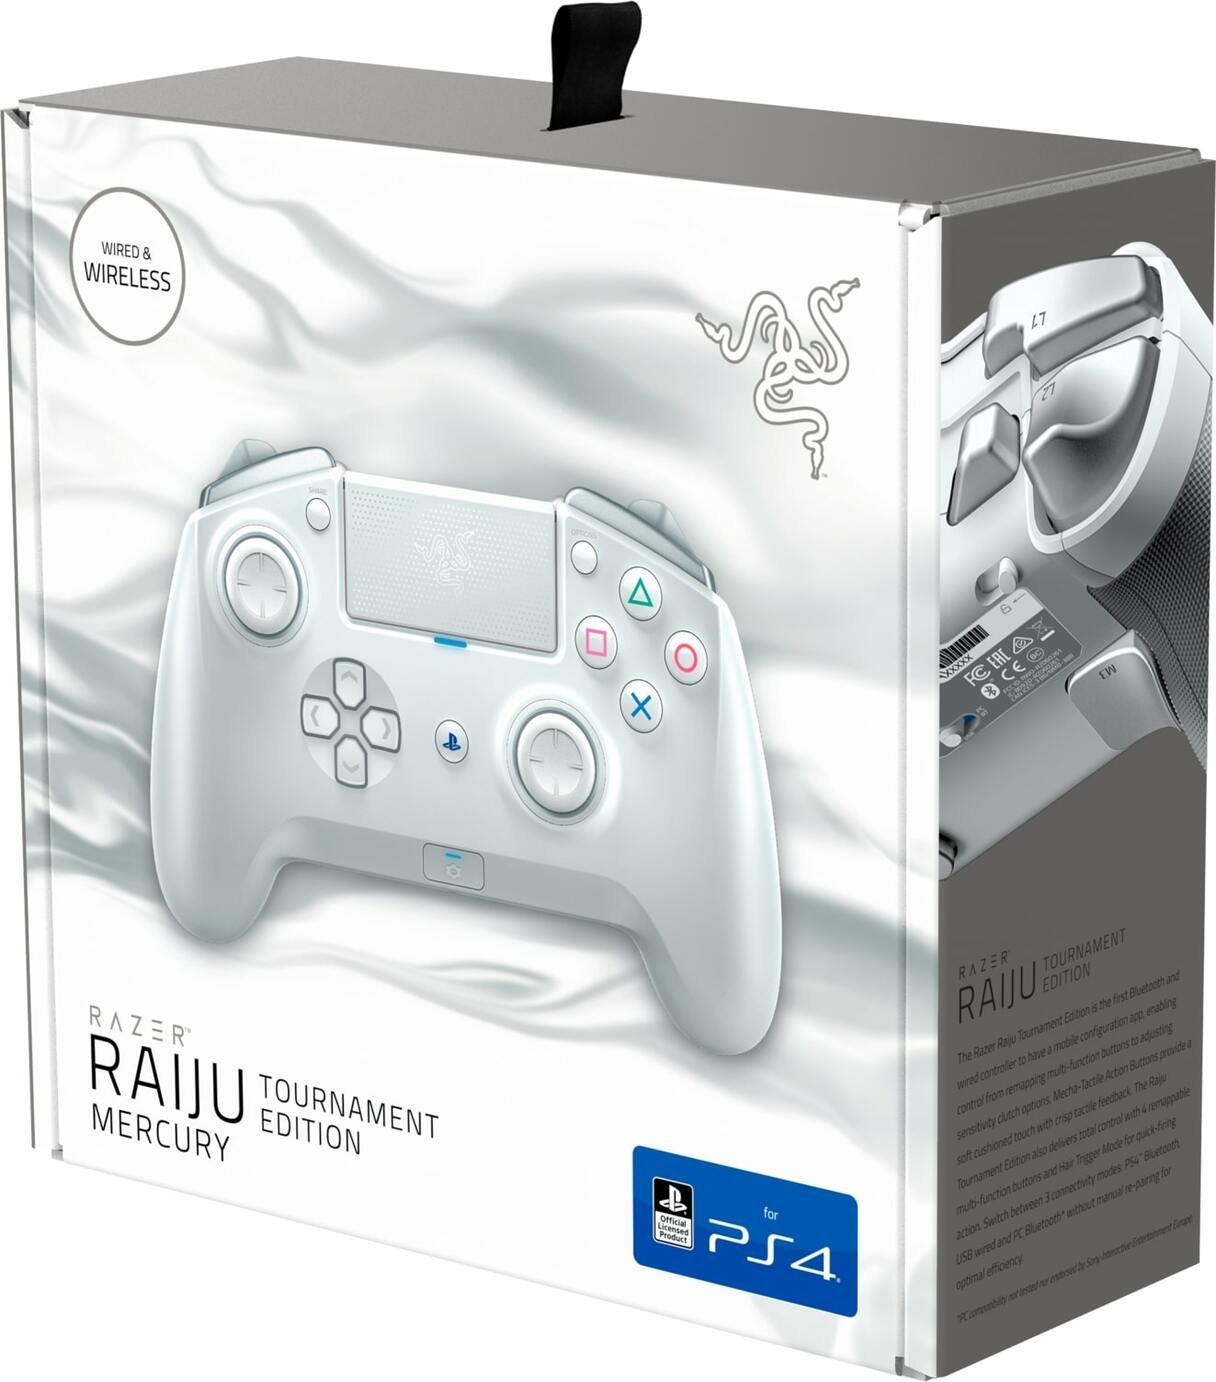 Razer Raiju Tournament Edn Wireless PS4 Controller Review